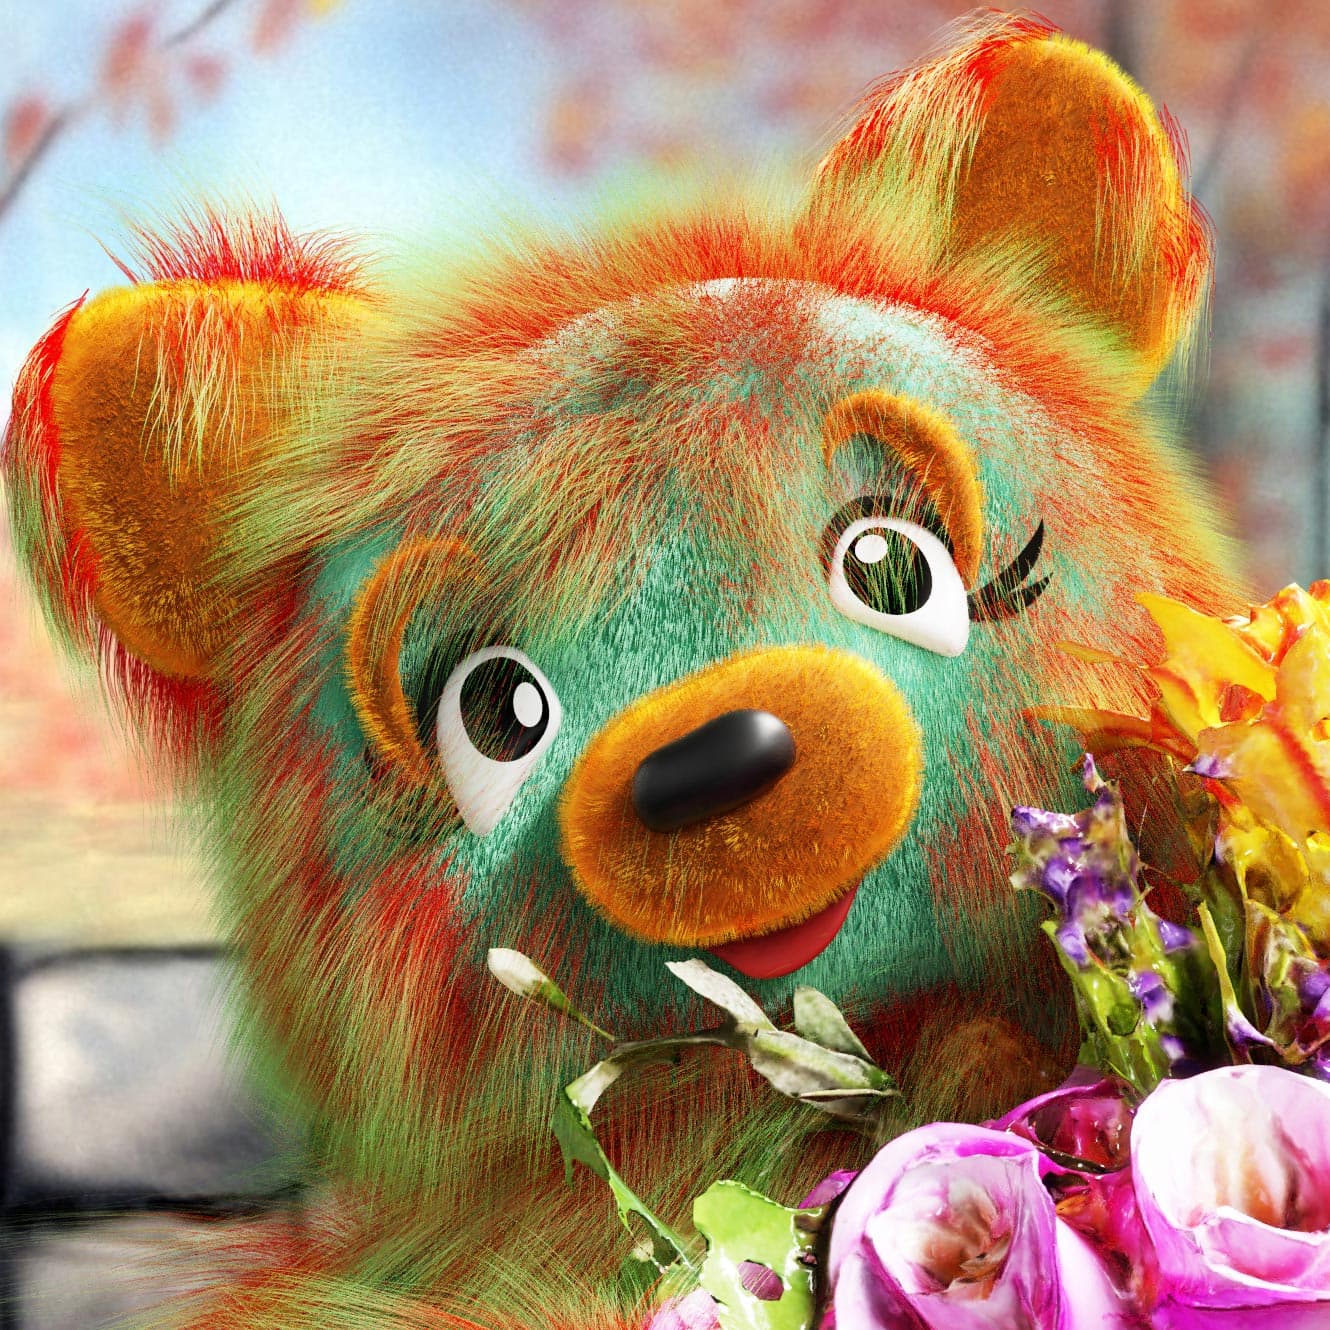 CGI image close-up of a teddy bear head